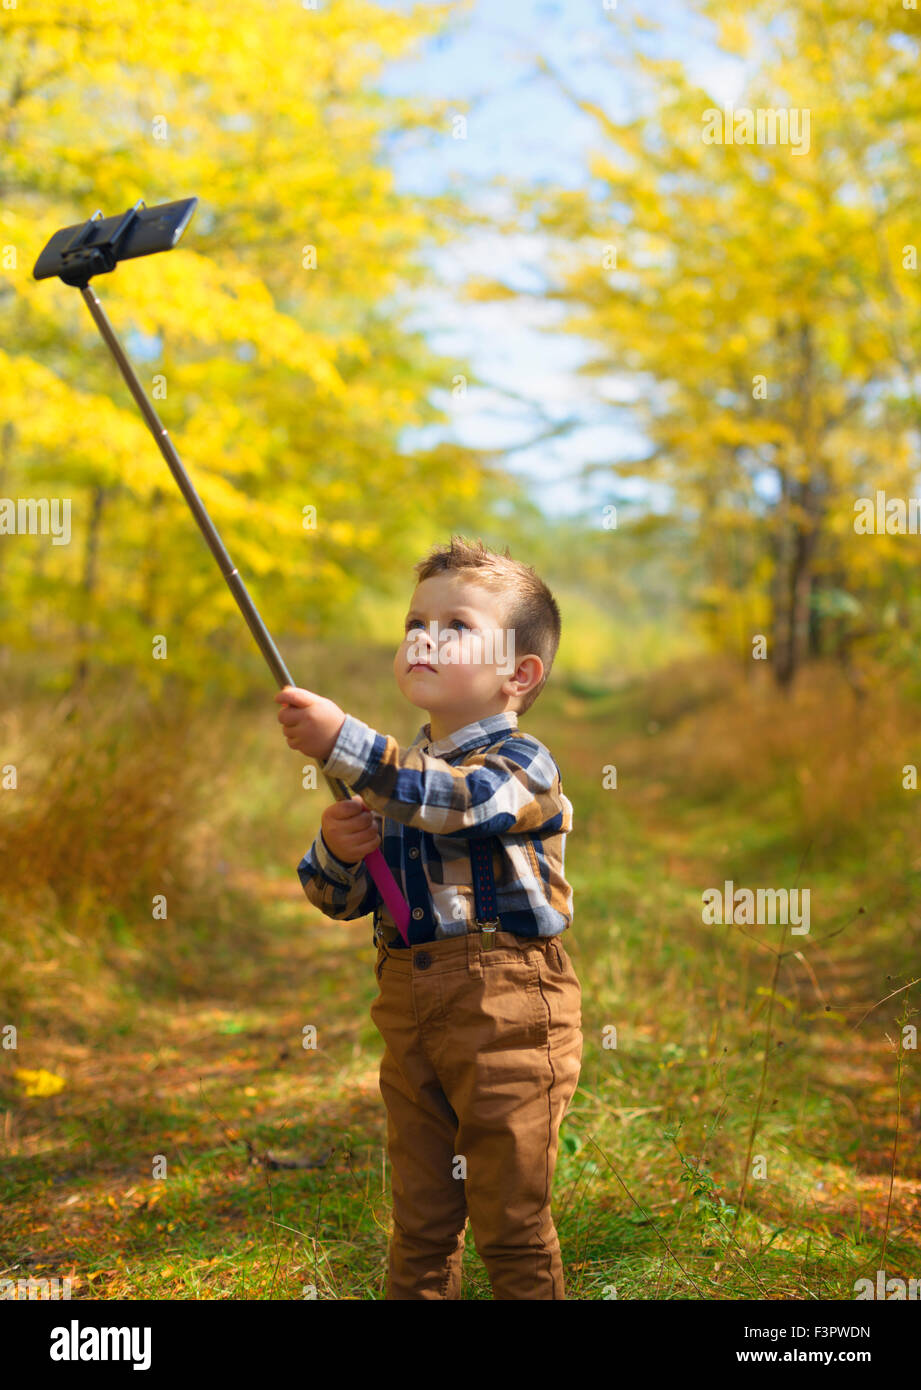 happy little boy taking selfie stick picture Stock Photo